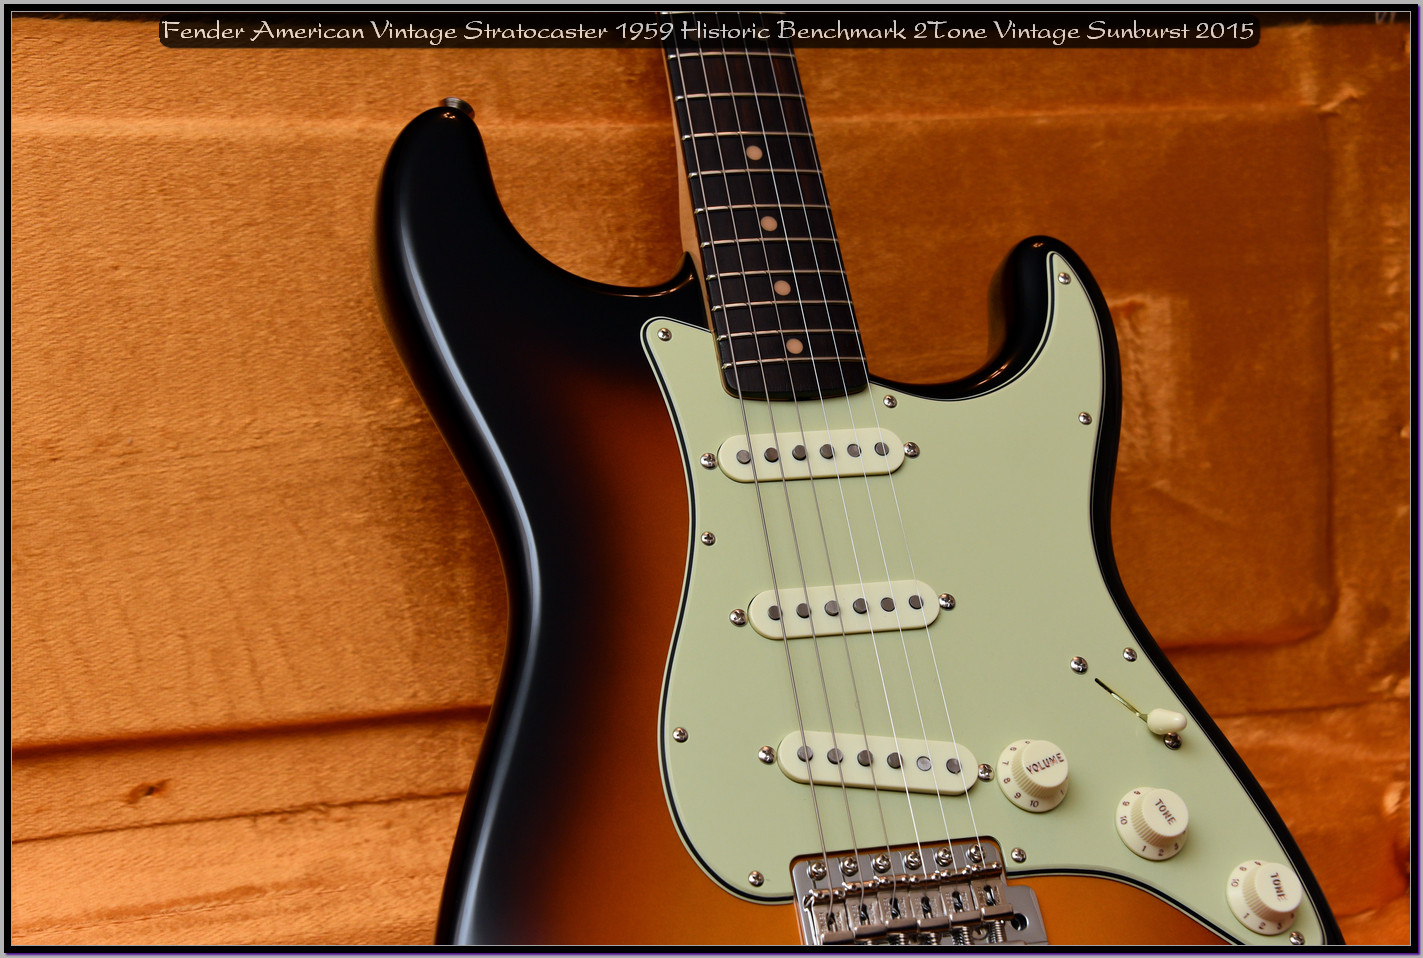 Fender American Vintage Stratocaster 1959 Historic Benchmark 2Tone Vintage Sunburst 2015 44_x1400.jpg